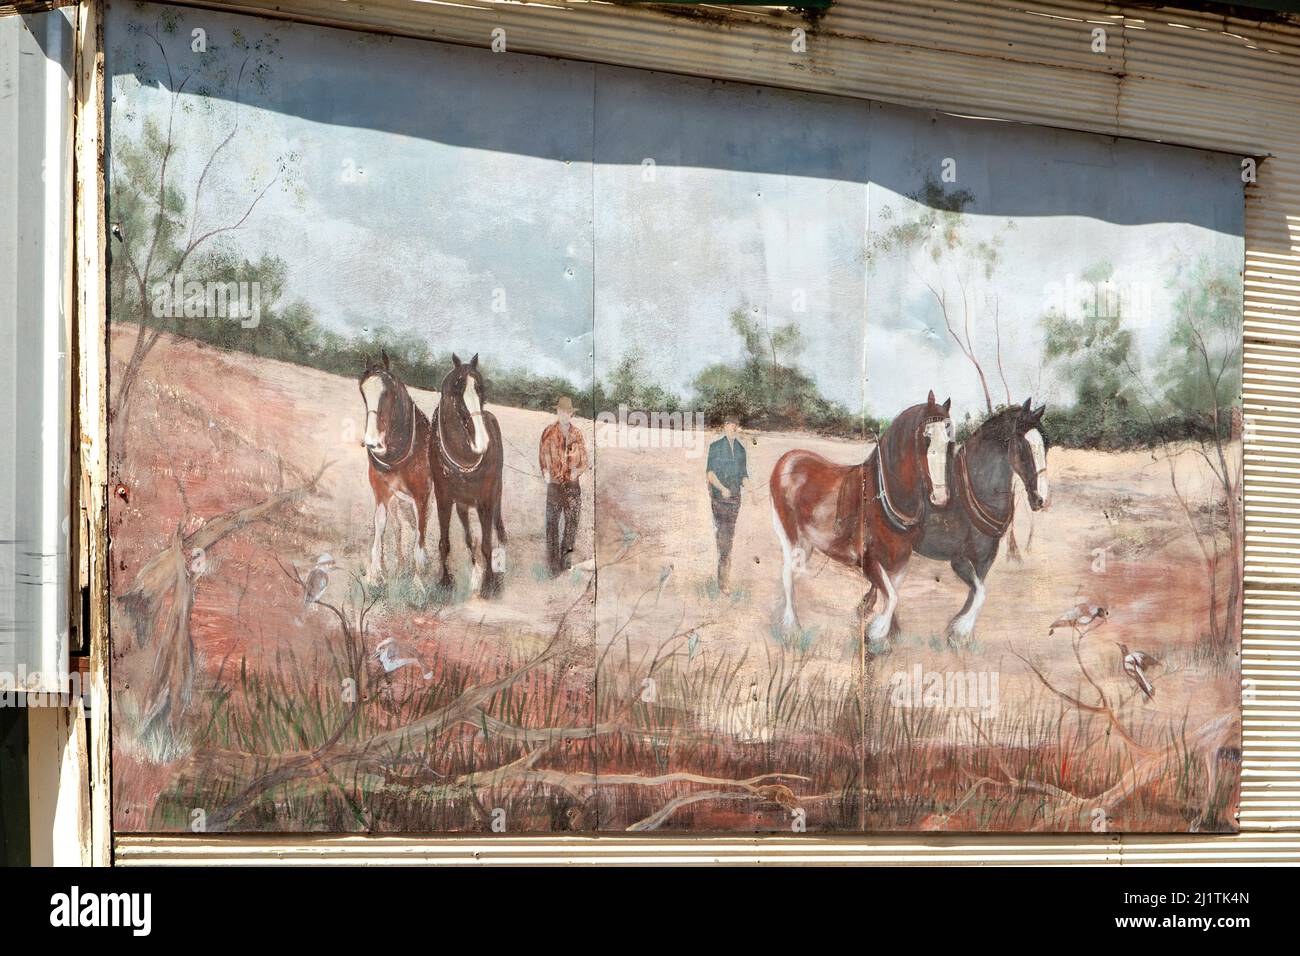 Working Horses Street Art, Sea Lake, Victoria, Australie Banque D'Images